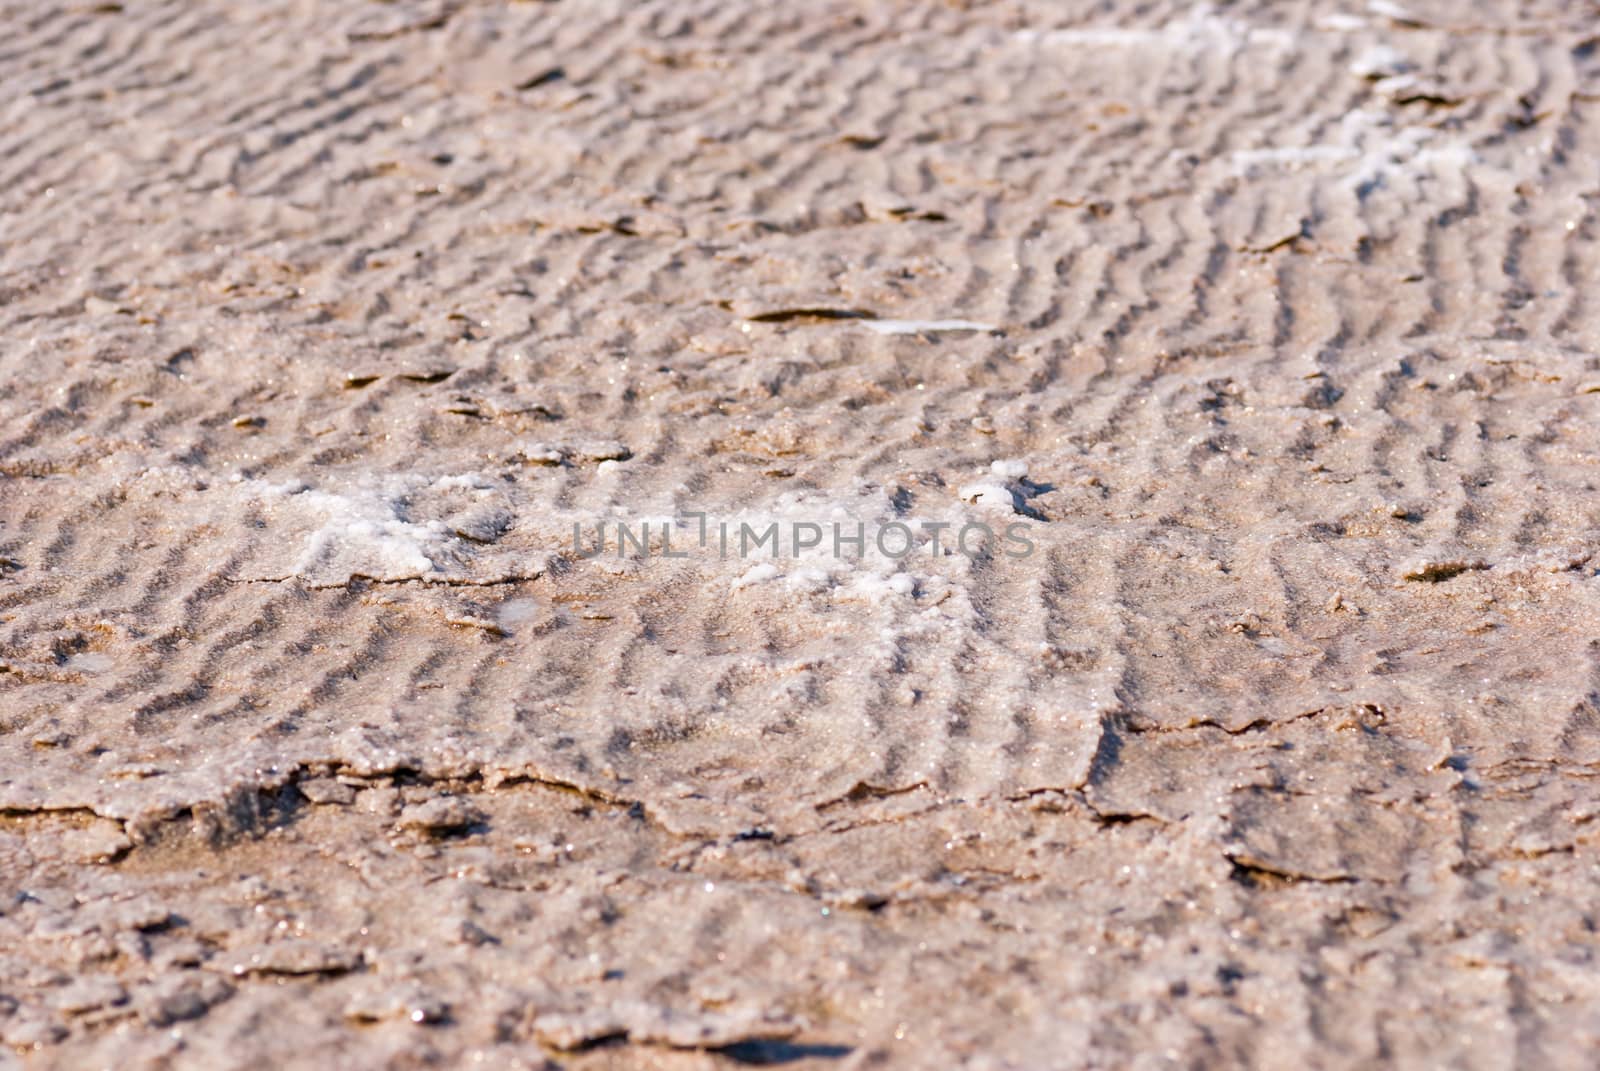 Dry salt lake bottom full of texture.The cracks form a distinctive lightning like pattern.